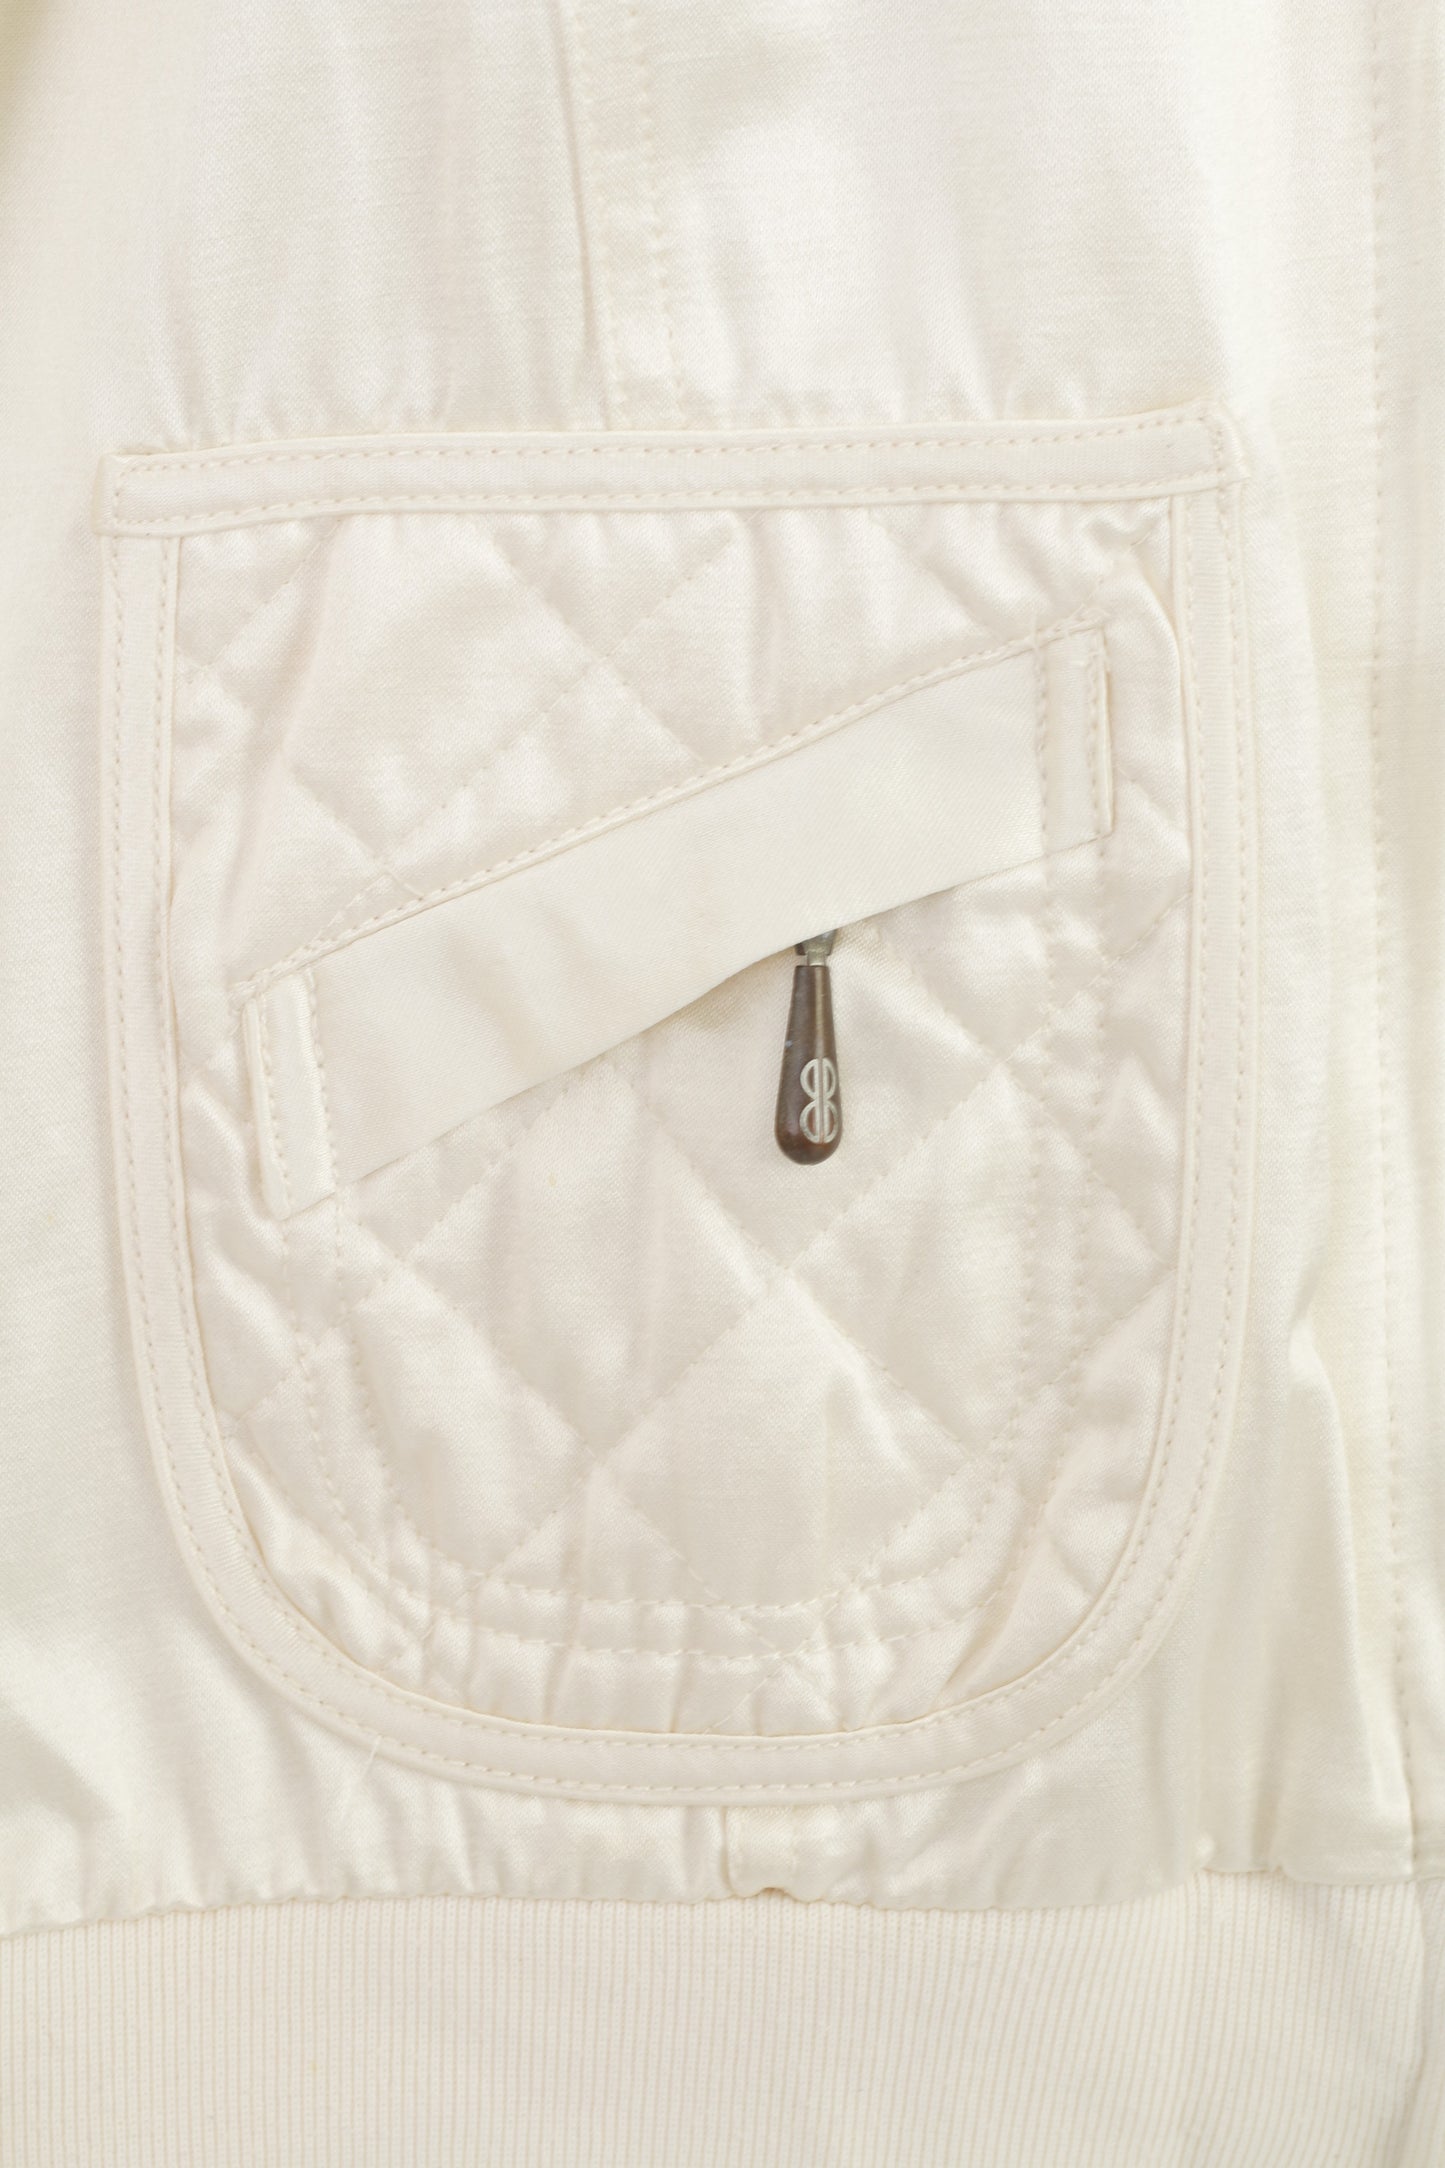 Bill Blass Jeans Women M Jacket Retro Cream Shiny Quilted Cotton Blend Pockets Zip Up Vintage Top